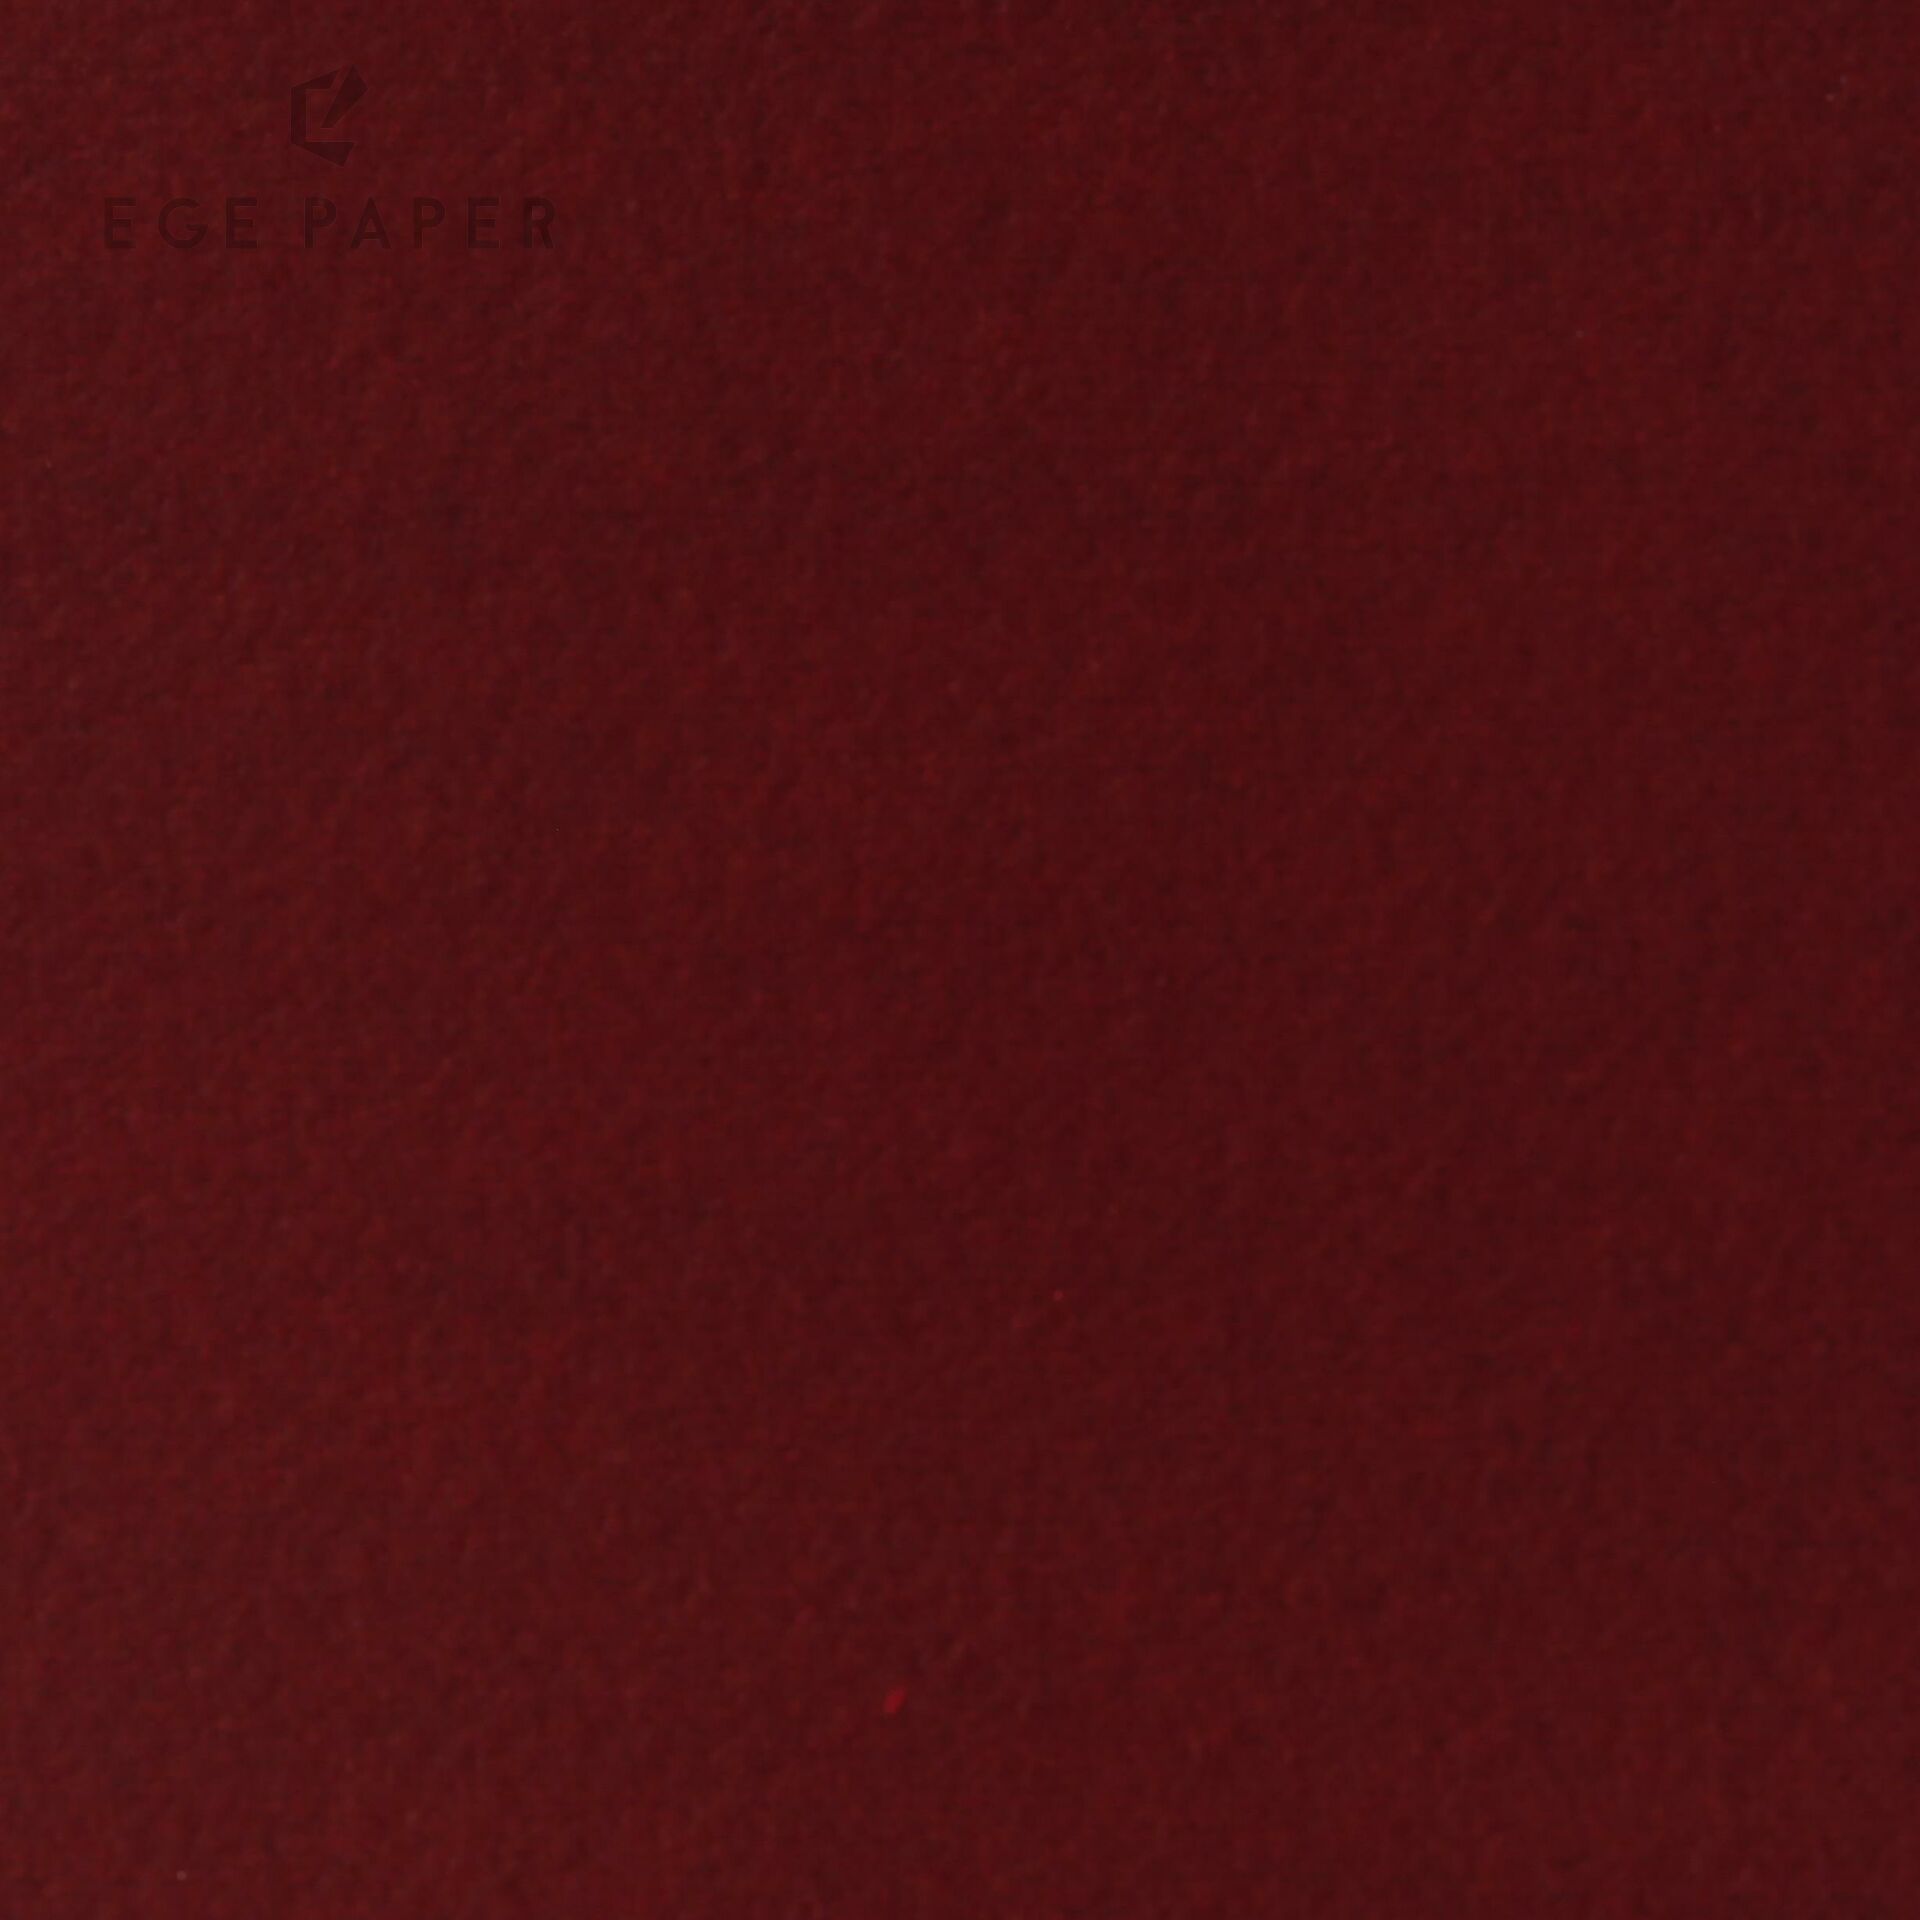 GRANITE - CLARET RED (BURANO) - 120GR - 70X100CM